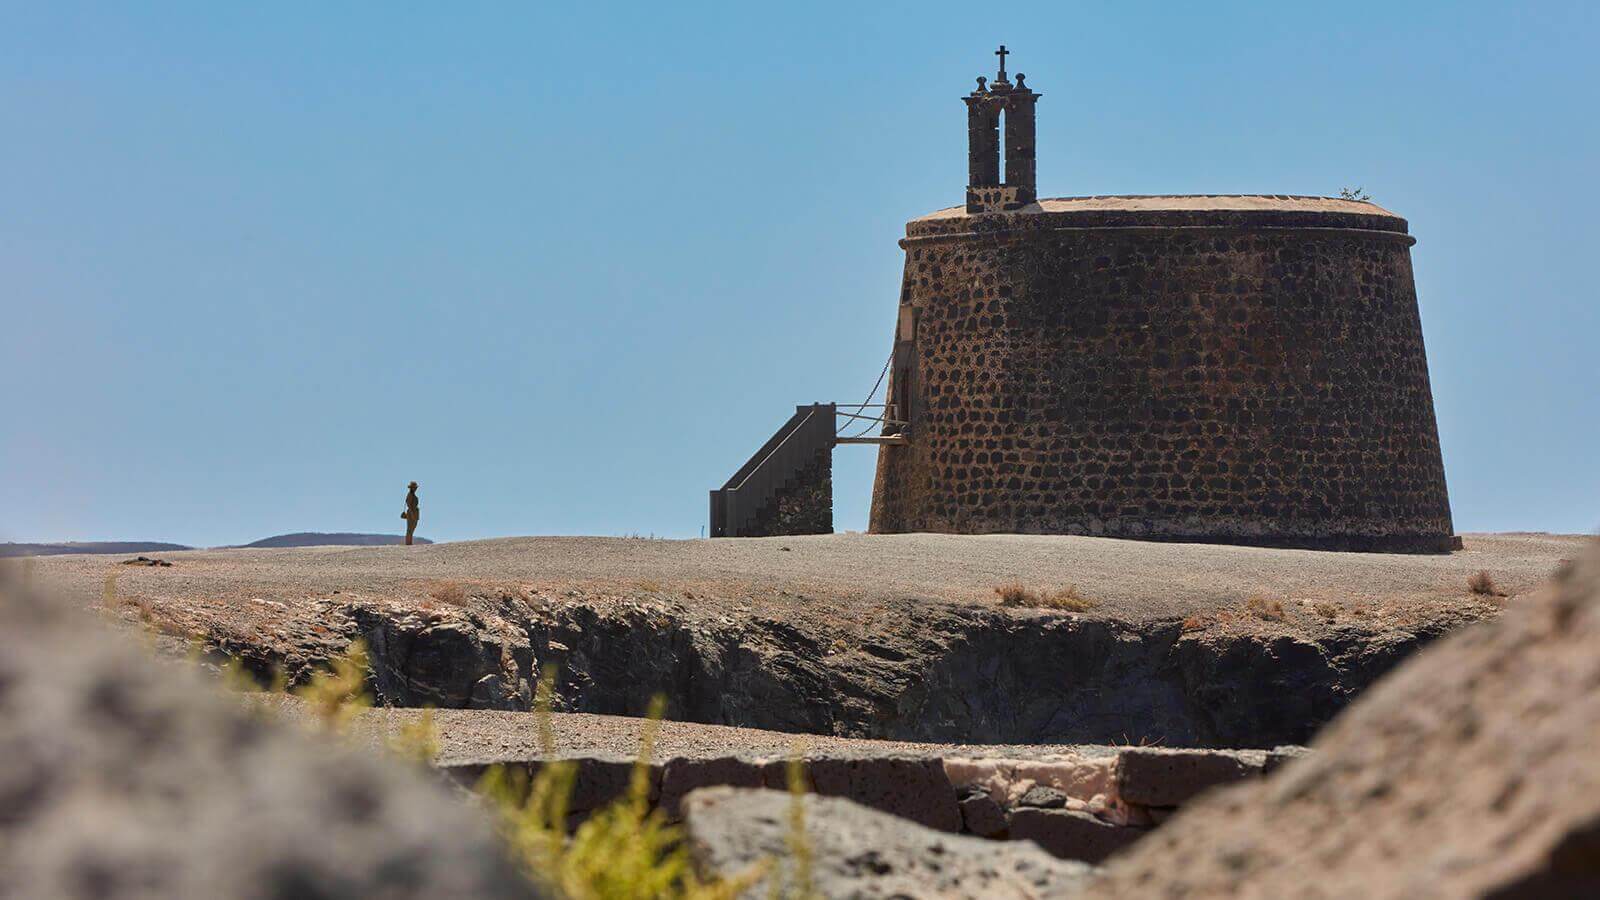 Festung von San Marcial del Rubicon und von Guanapay, Lanzarote.